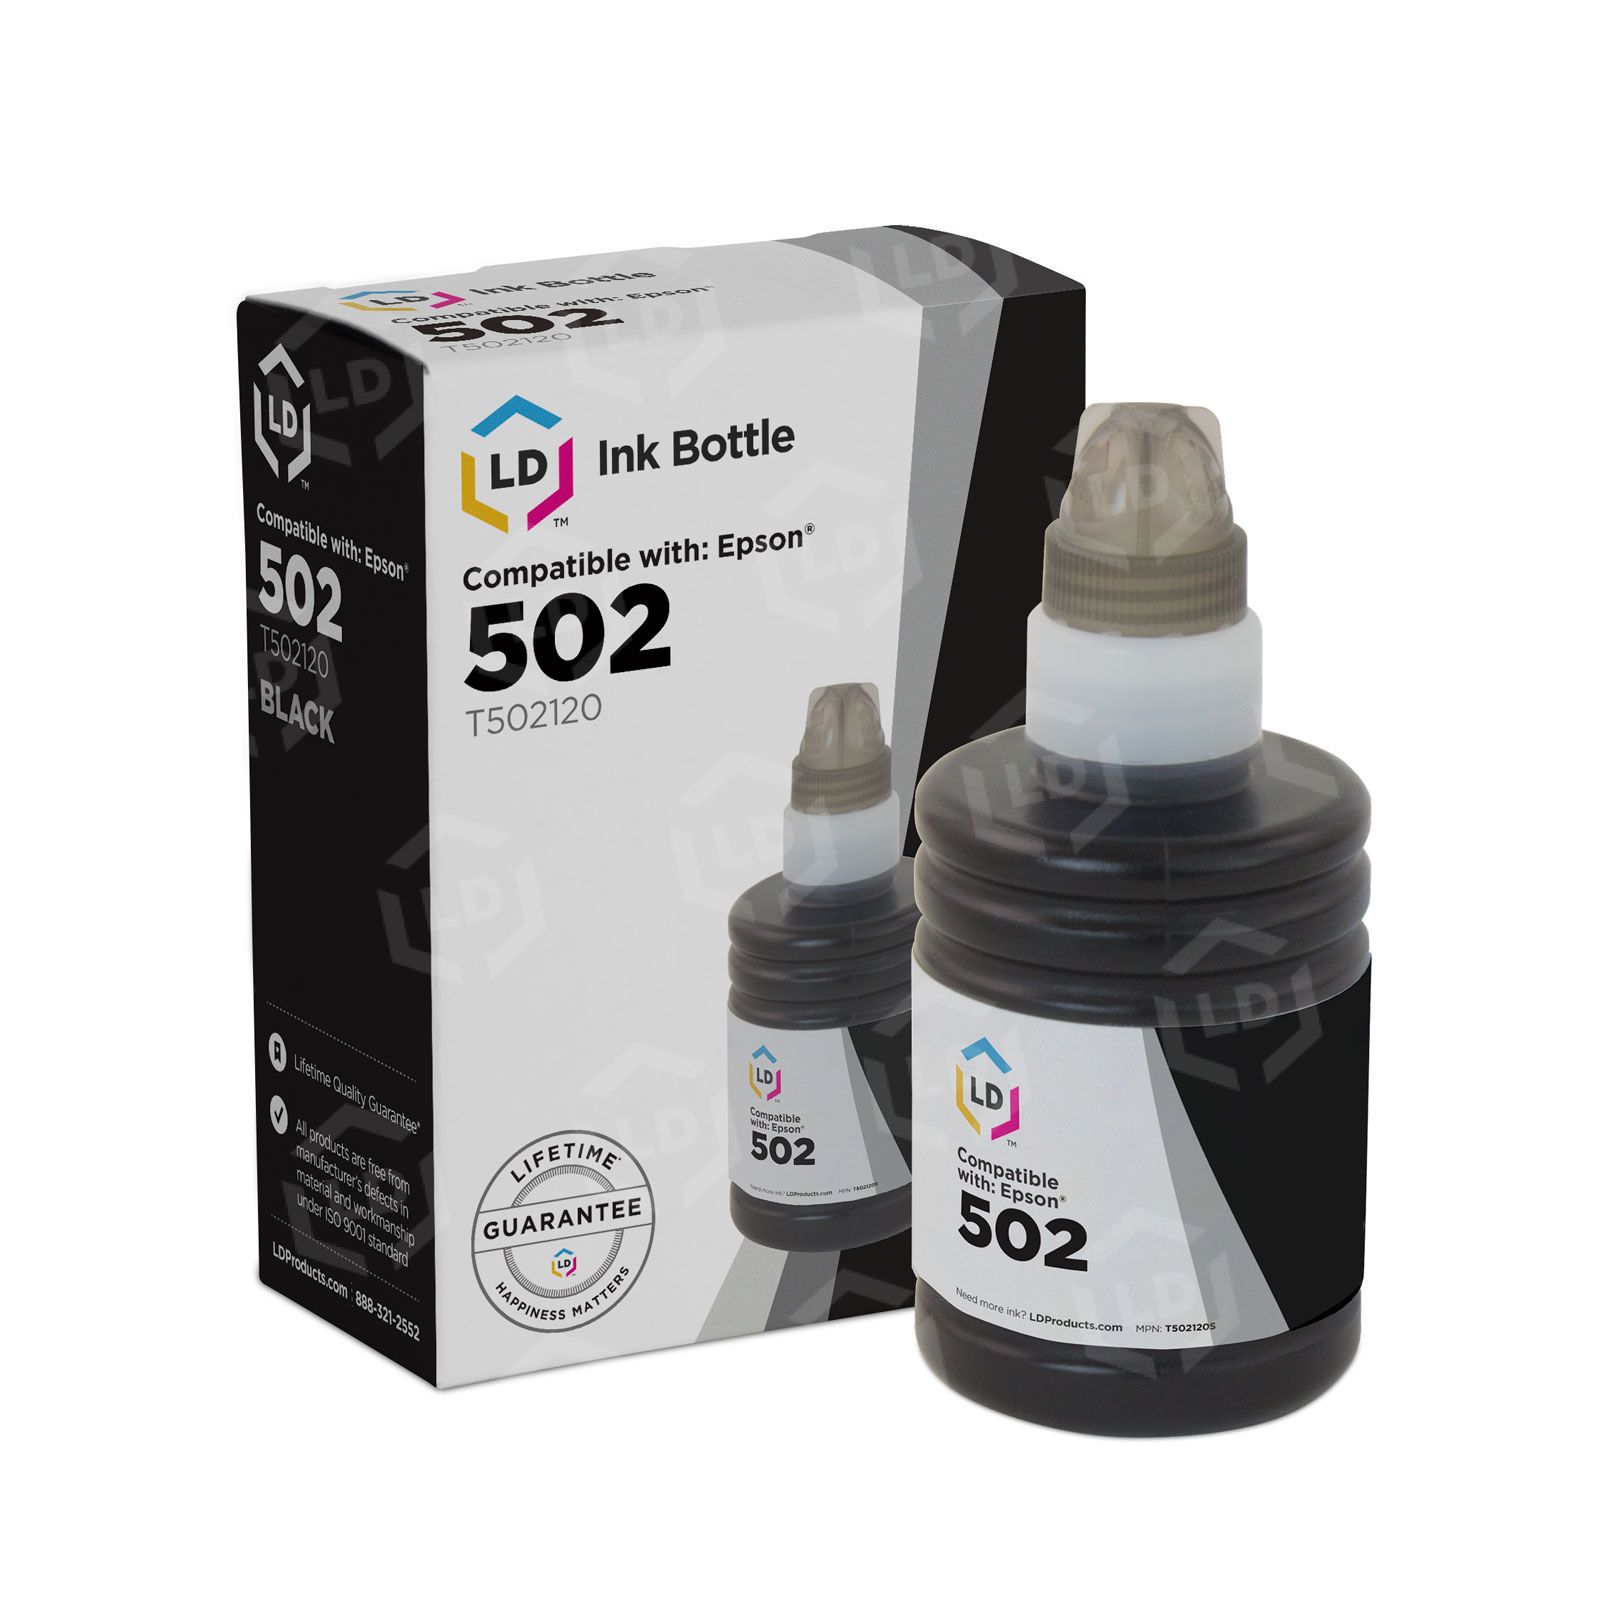 Epson 502 Black EcoTank Ink Bottle | Low Cost Option - LD Products